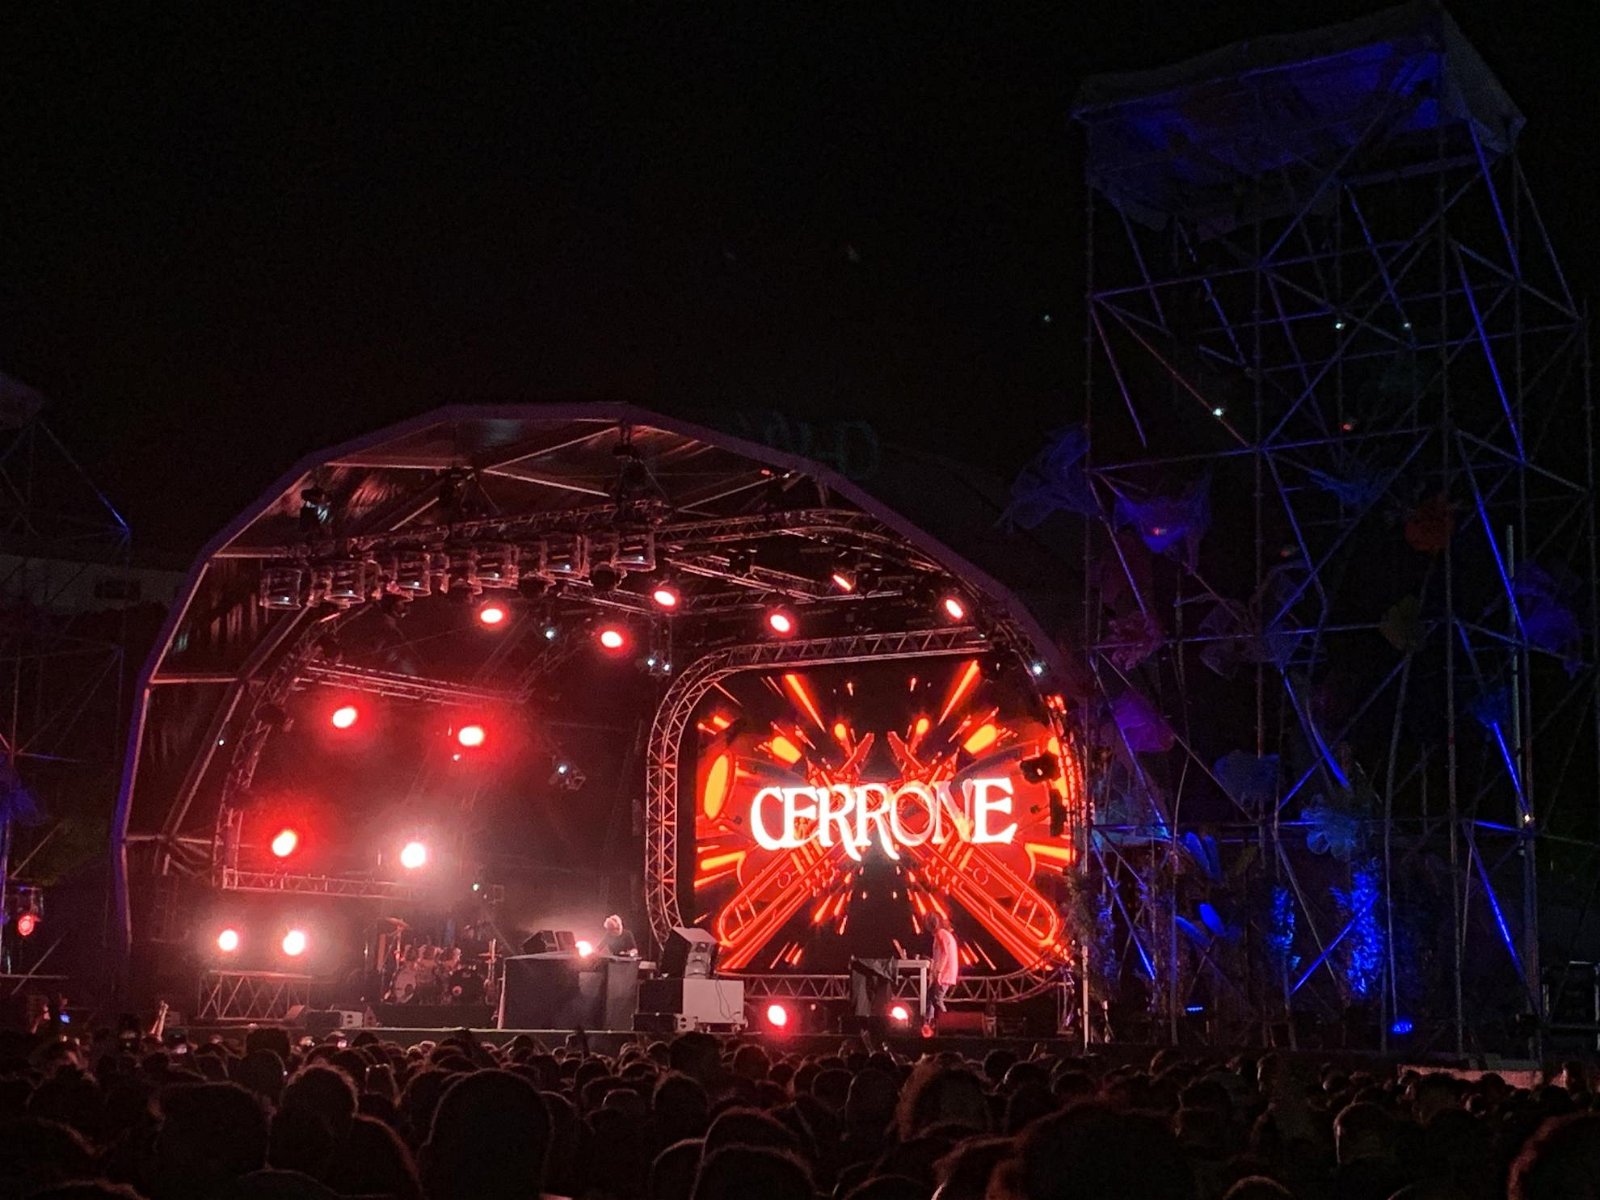 Cerrone (Paraíso festival 2019 by Fanmusicfest)